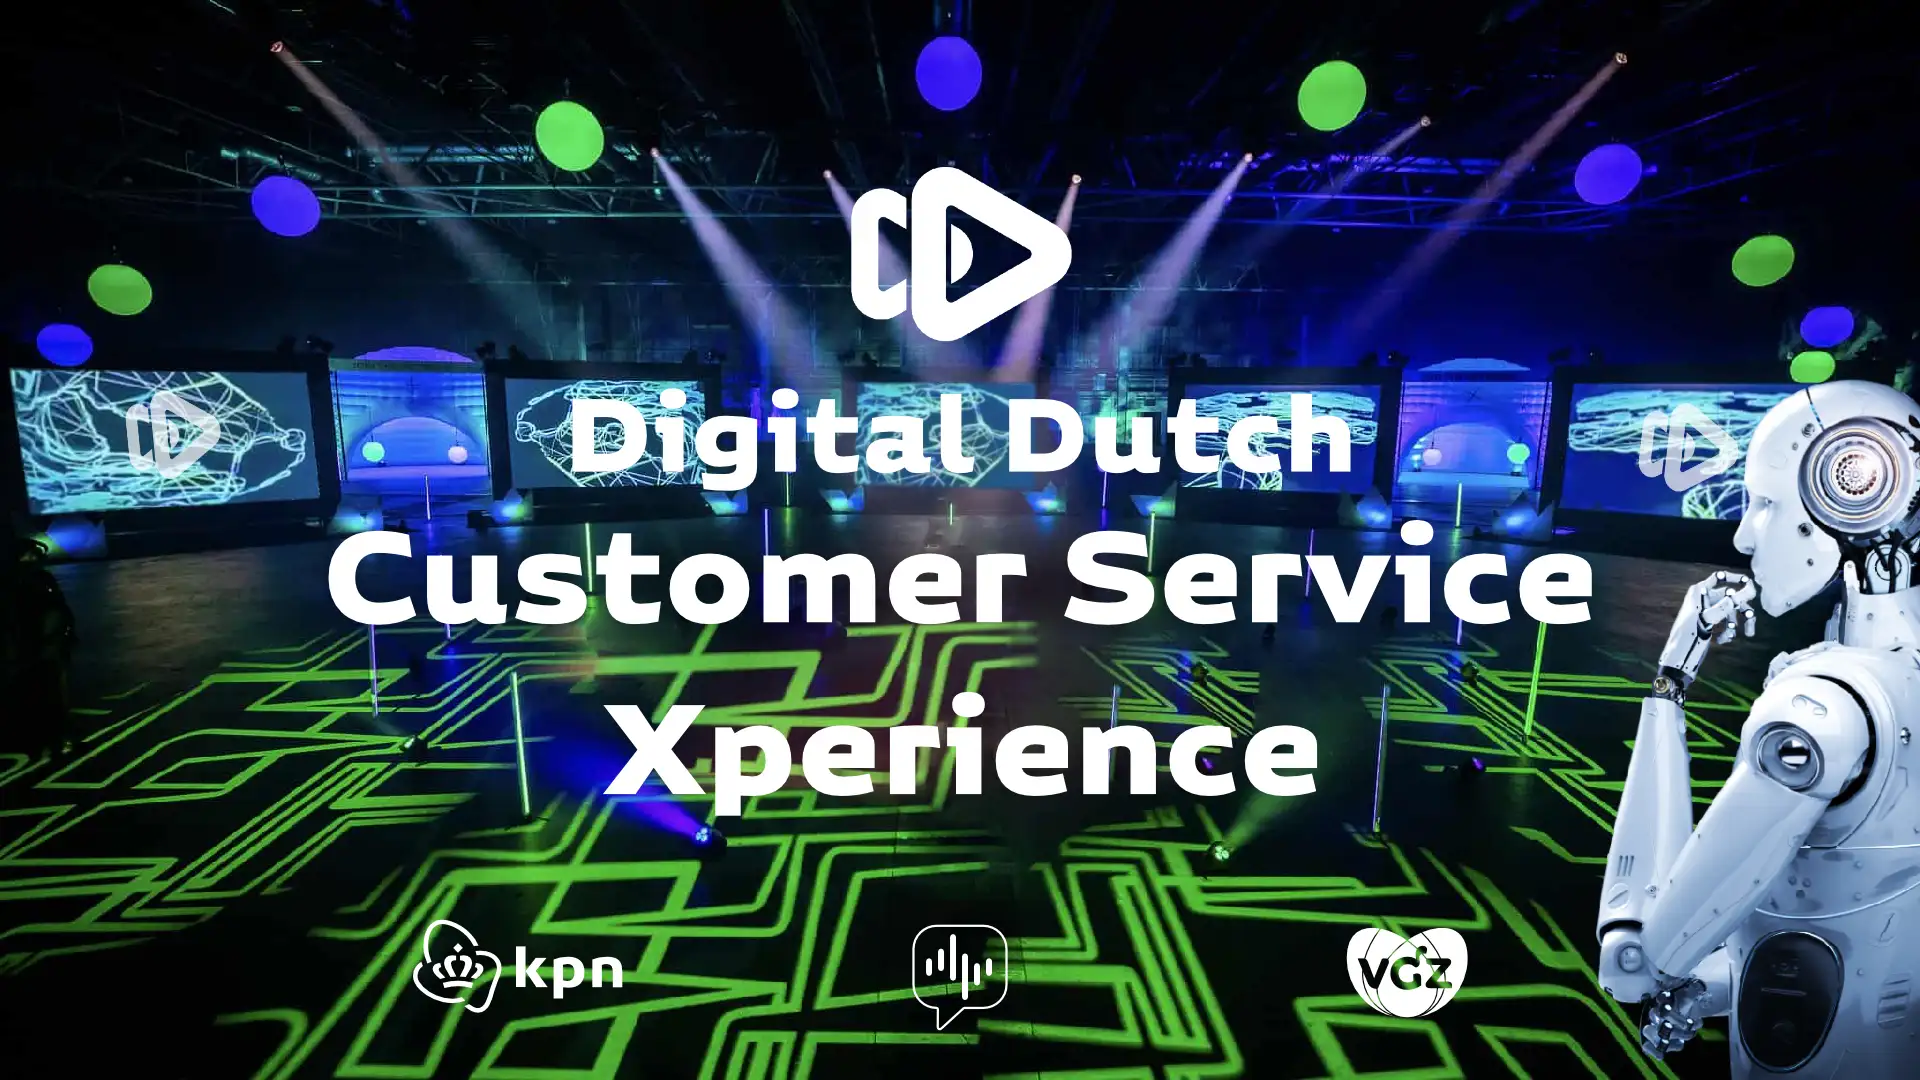 Digital Dutch Customer Service Xperience